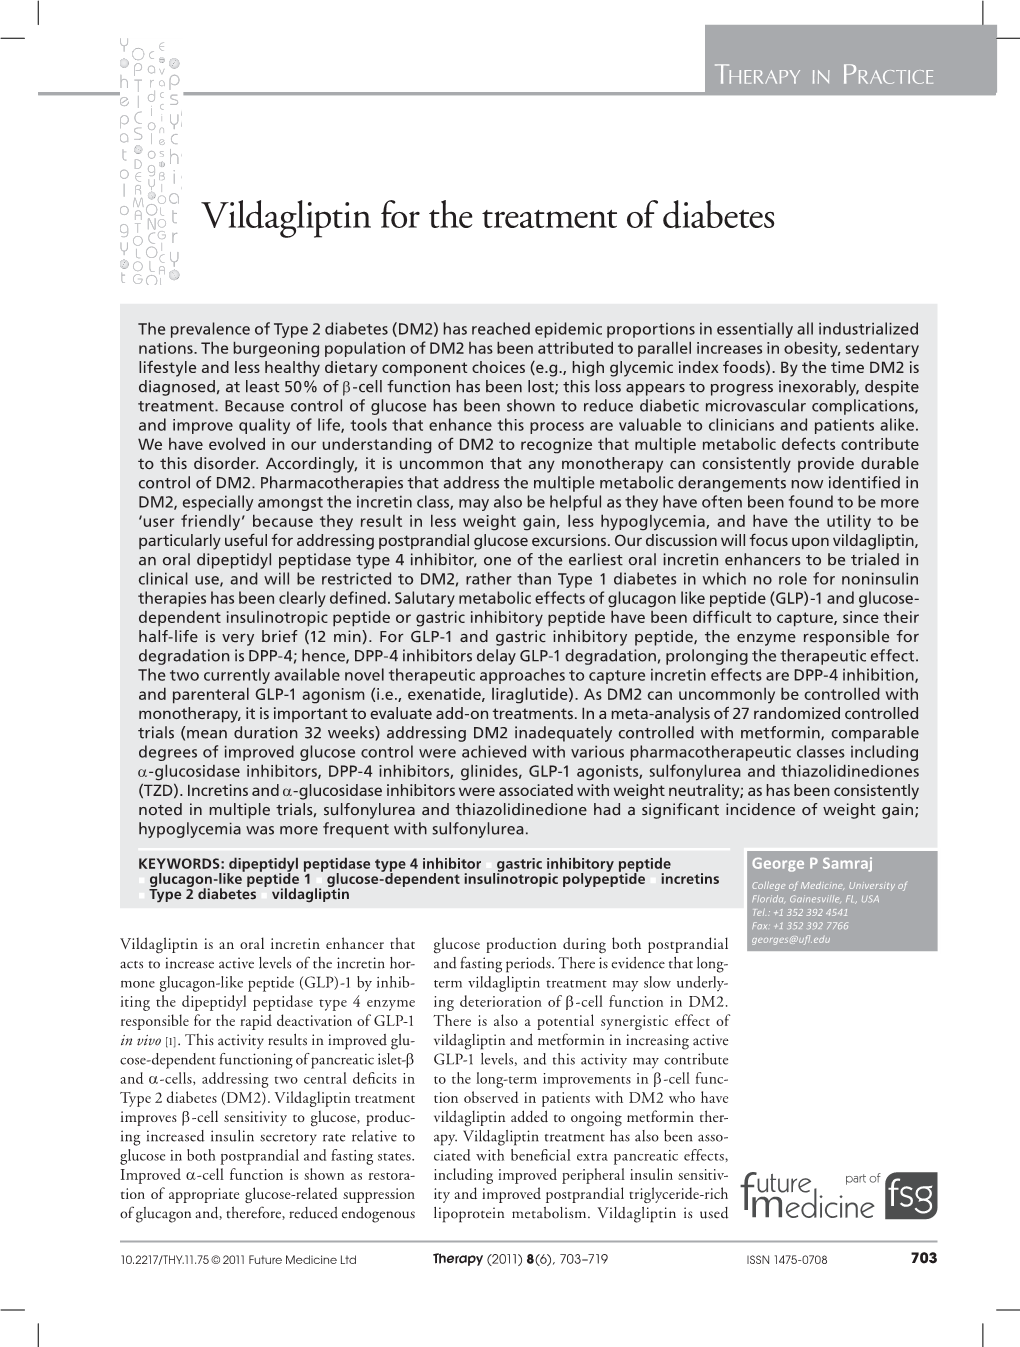 Vildagliptin for the Treatment of Diabetes